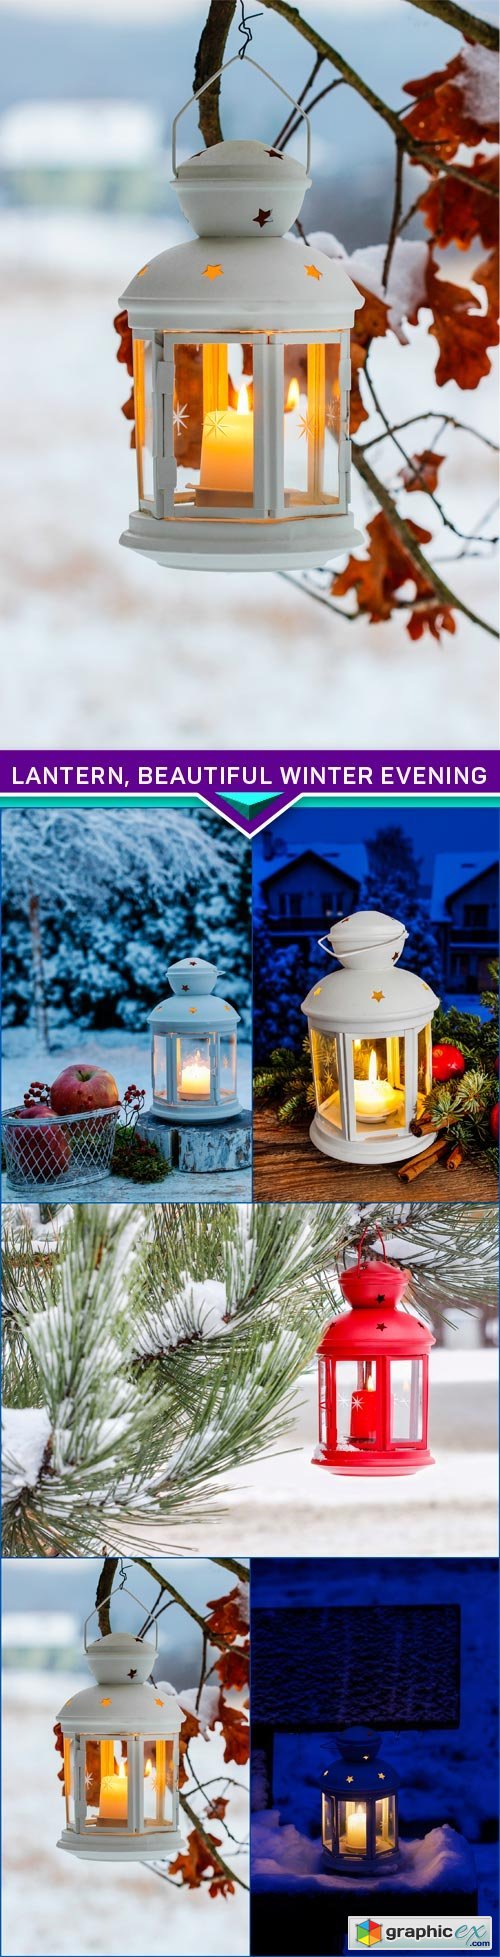 Lantern, beautiful winter evening 5X JPEG